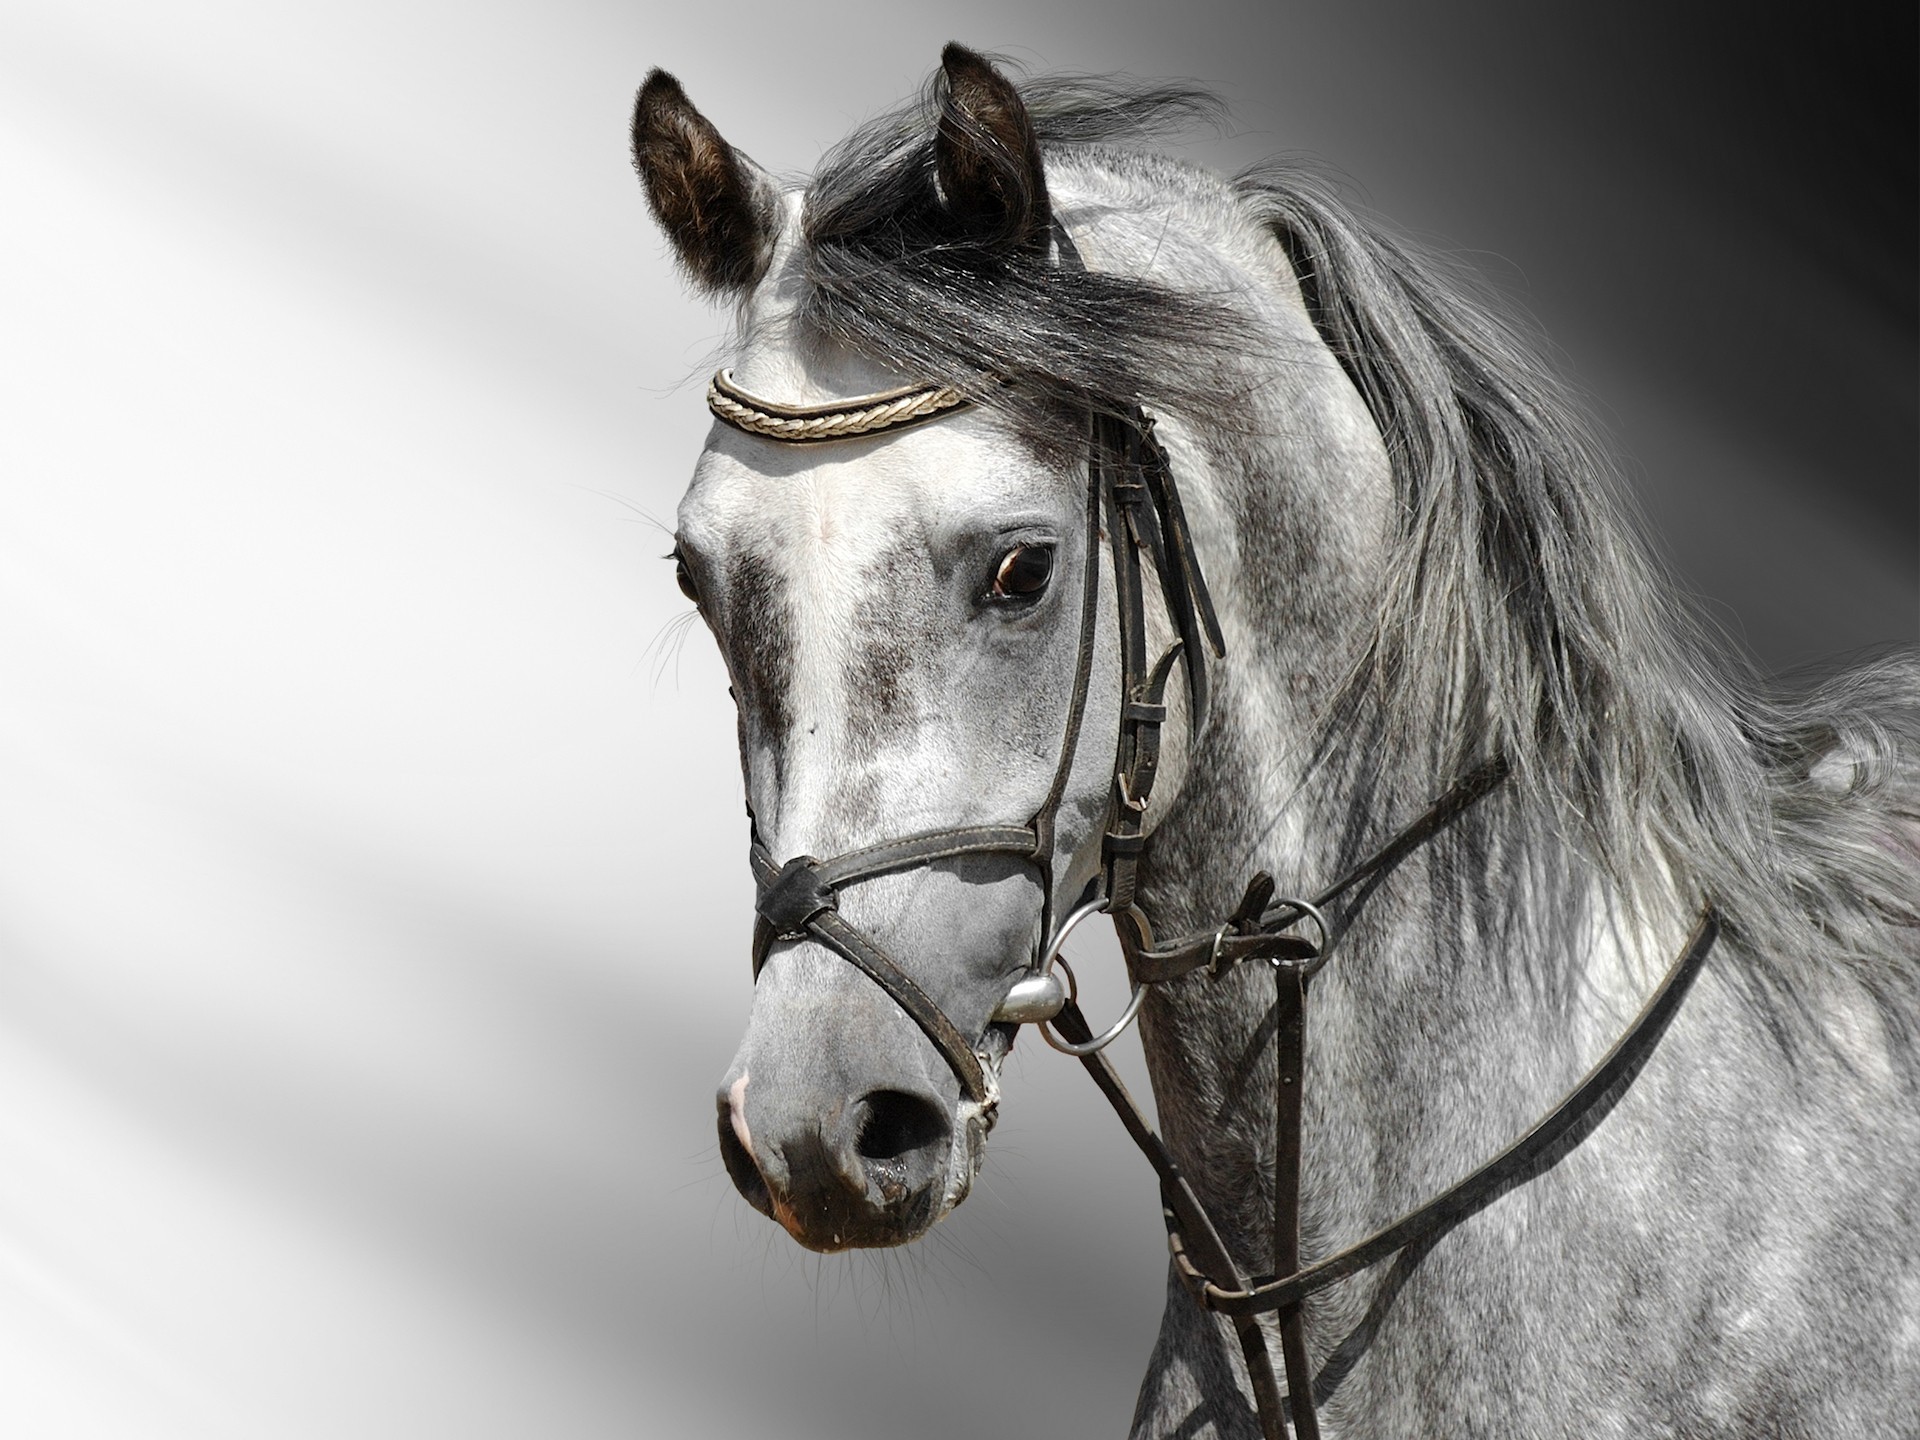 Amazing Cool Horse HD Wallpaper for Desktop | Horse Desktop ...